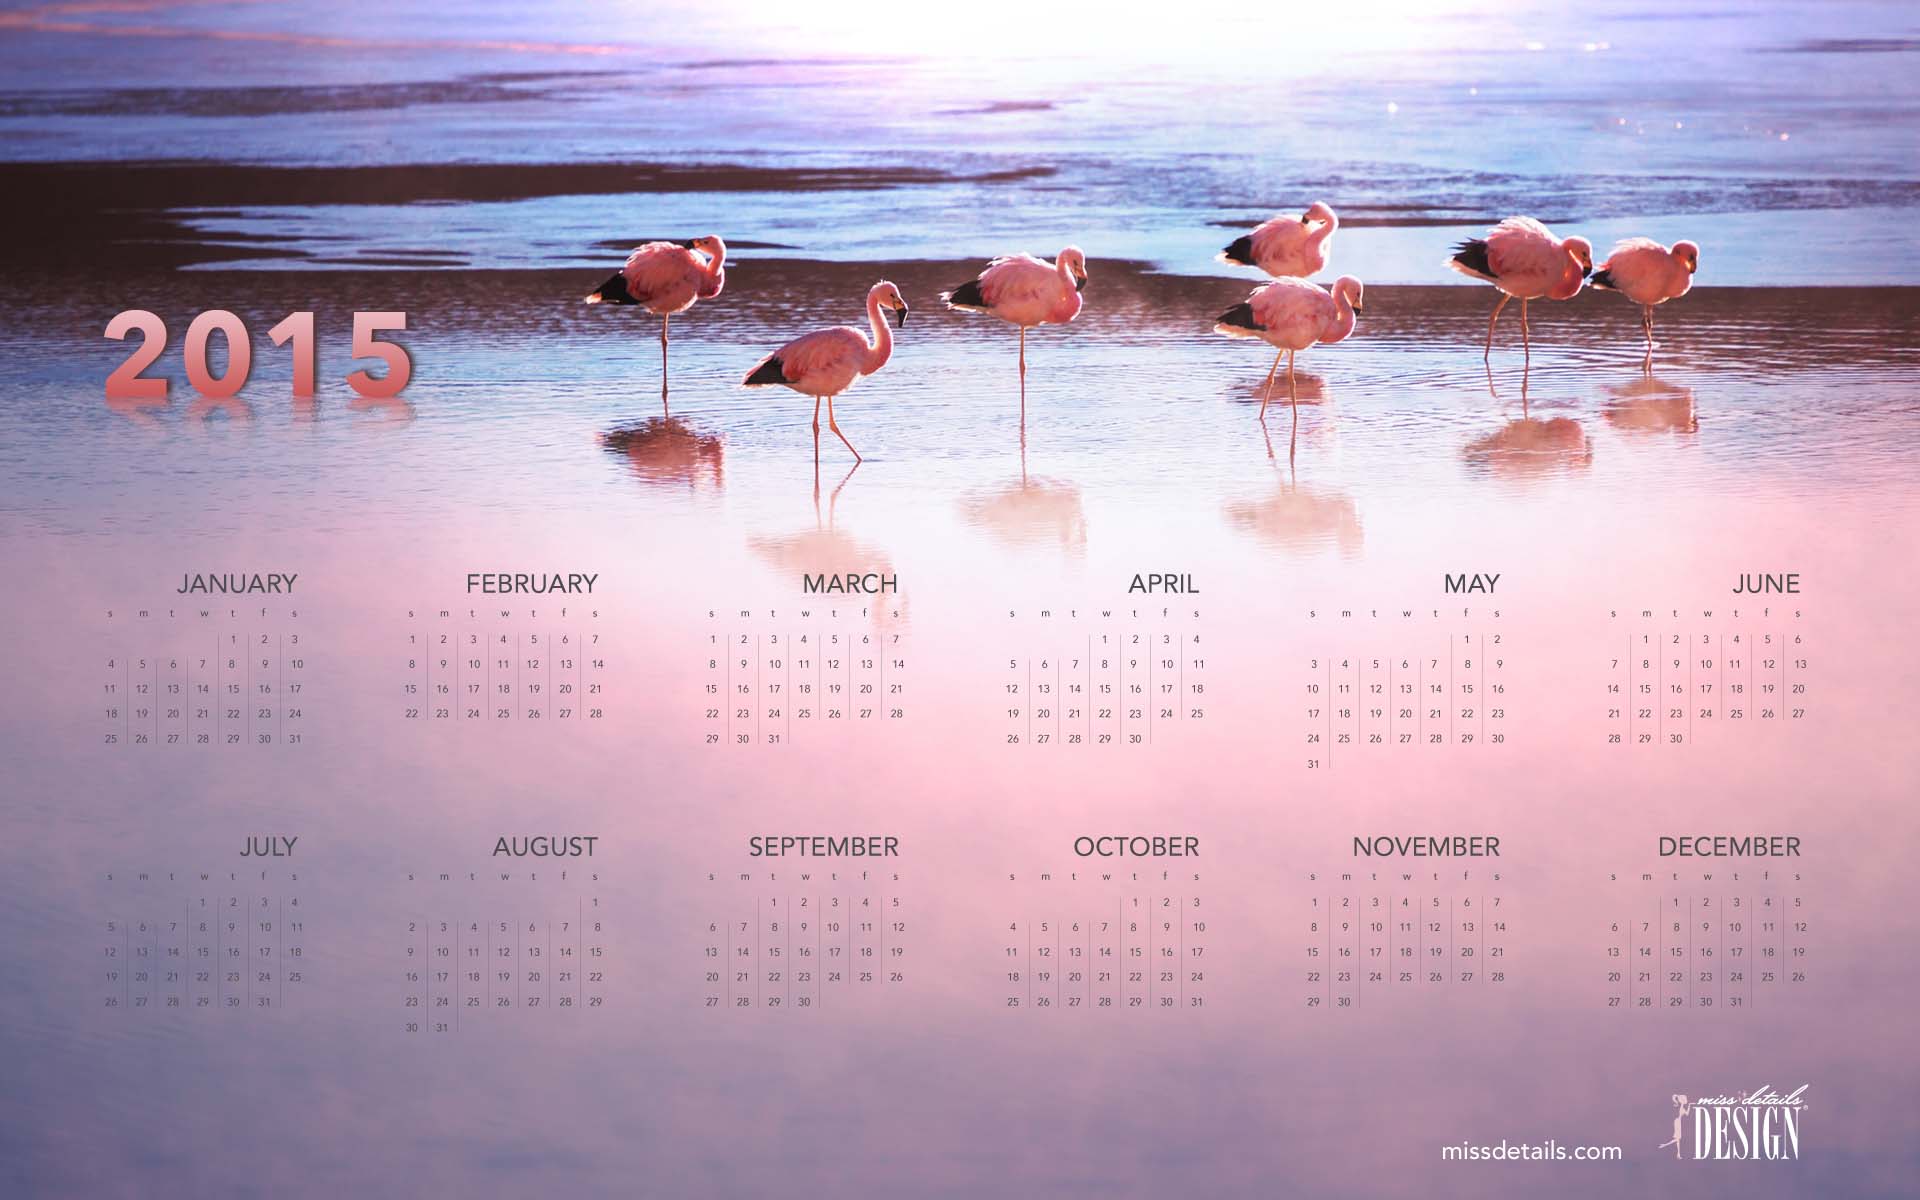 Inspiring Desktop Calendar From Missdetails Flamingos